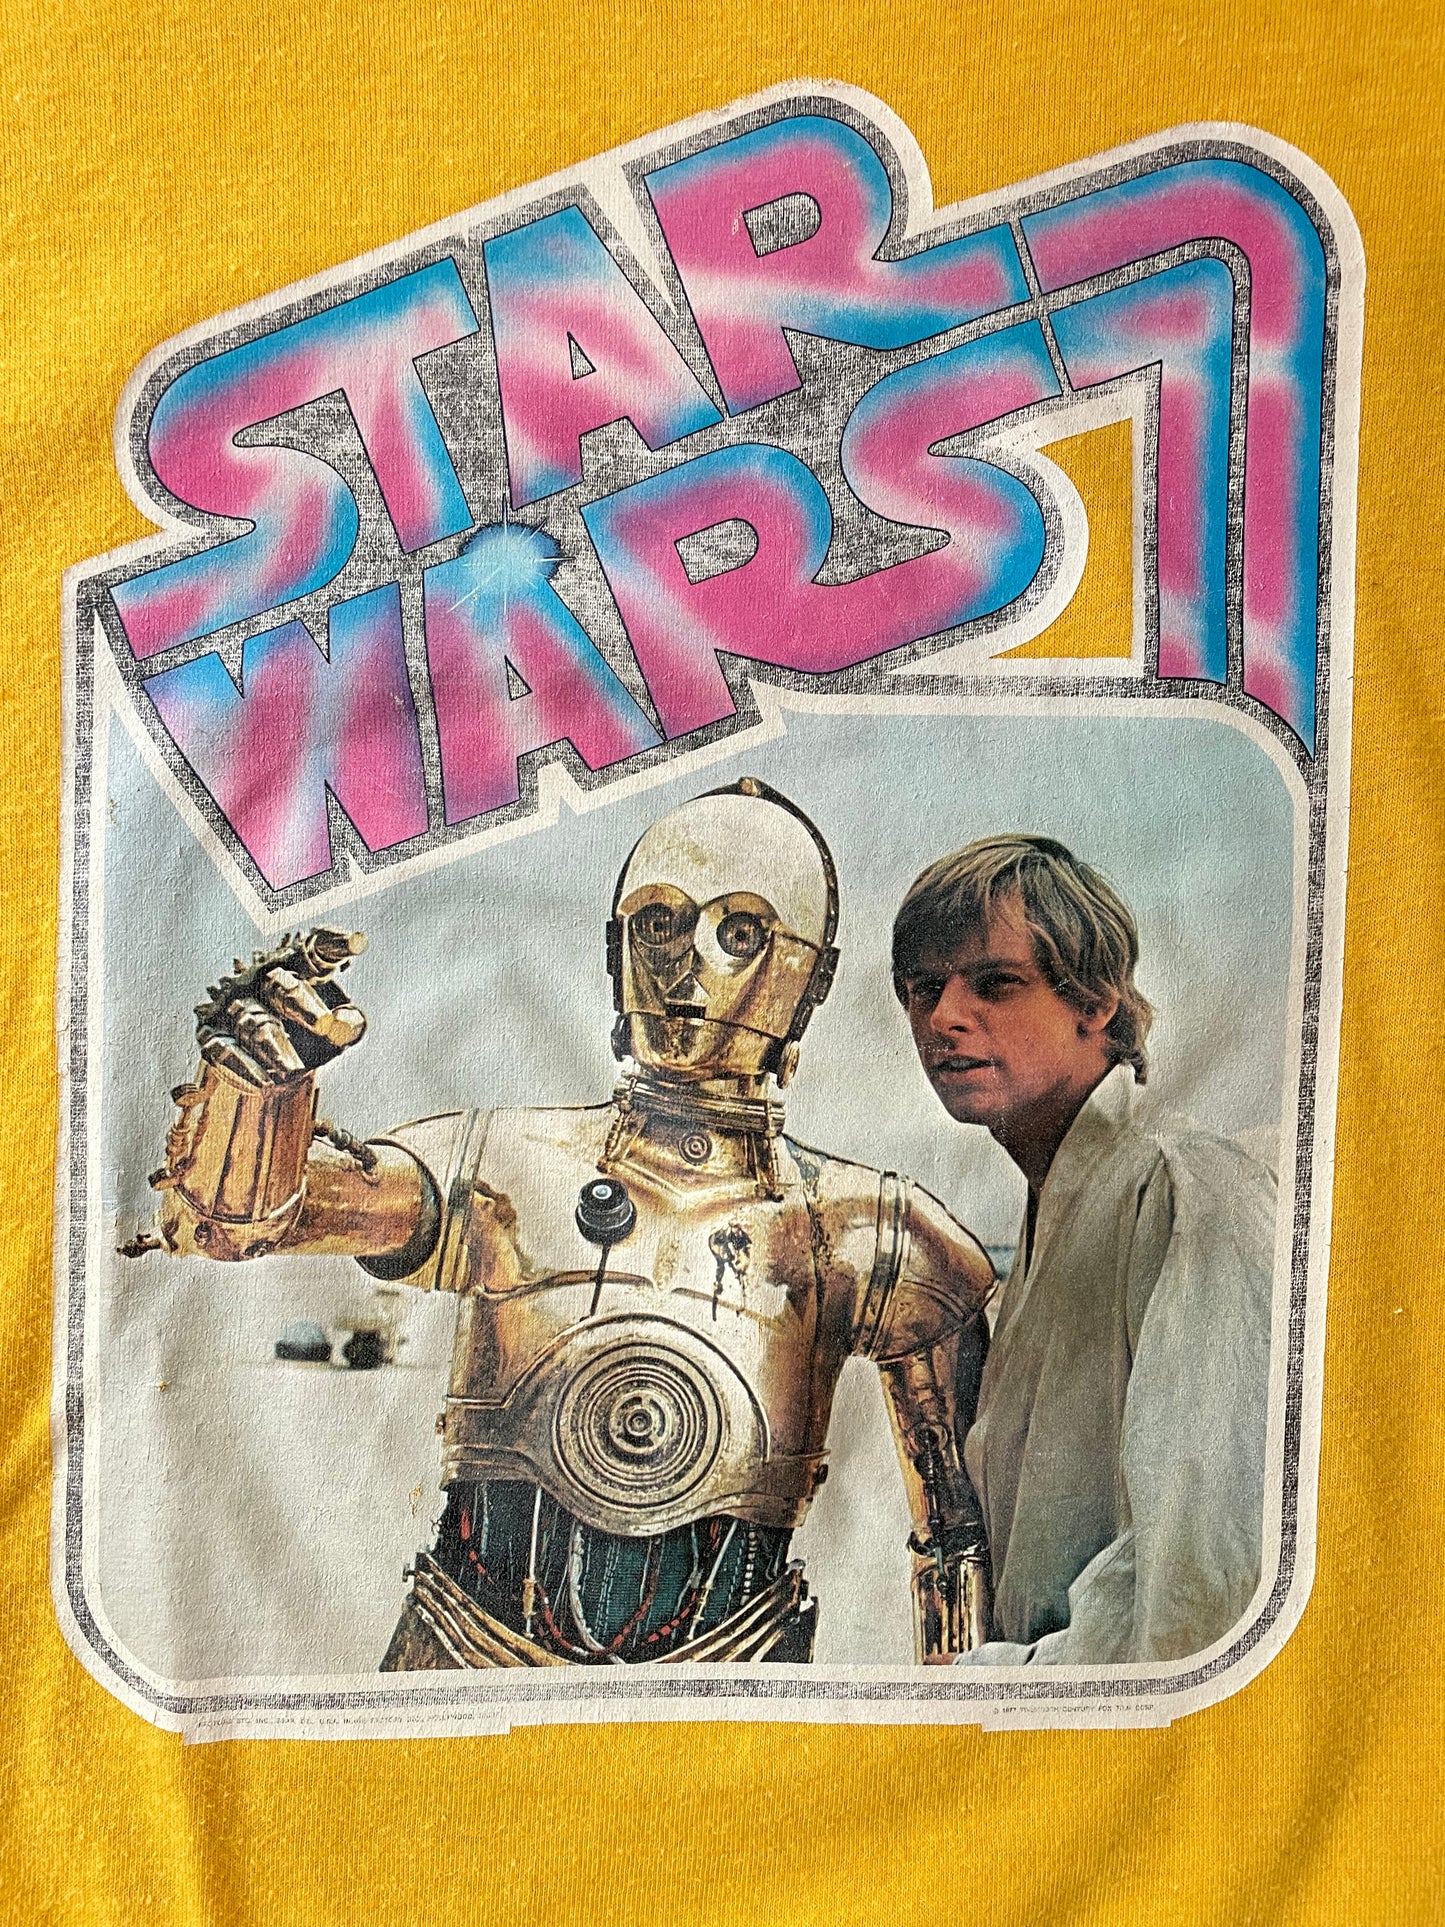 70s Star Wars Tee